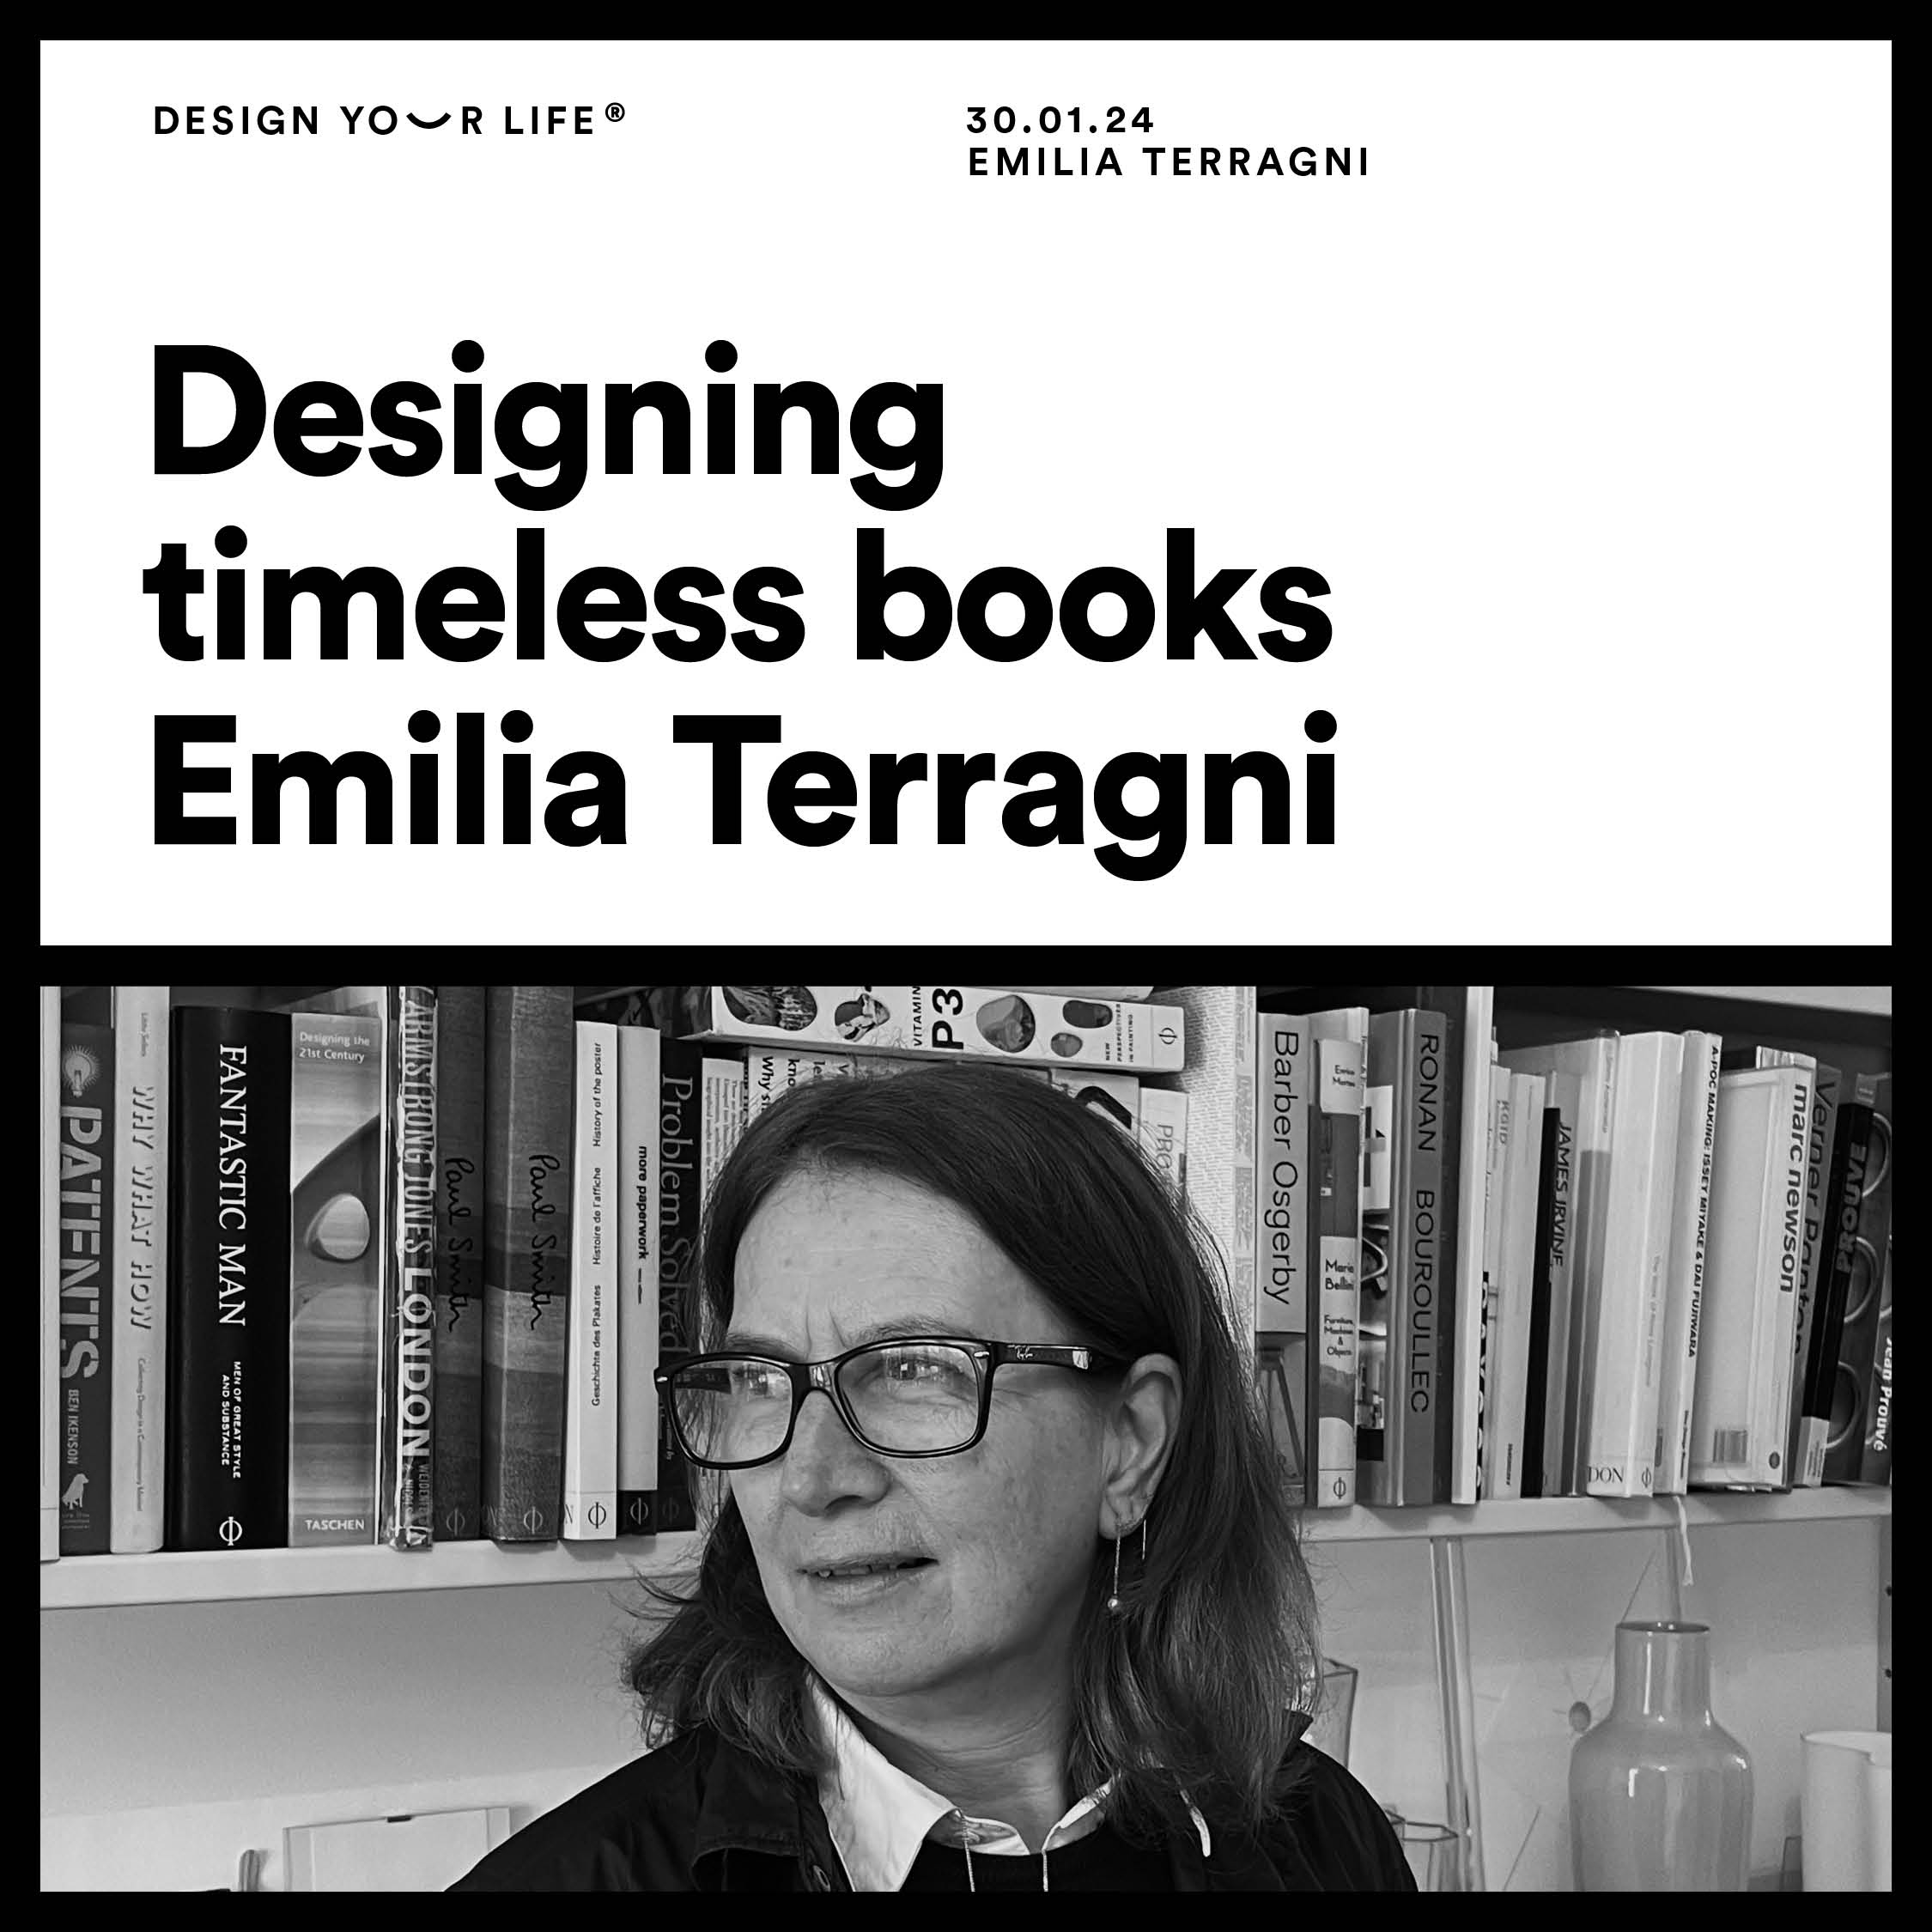 Designing timeless books with Emilia Terragni